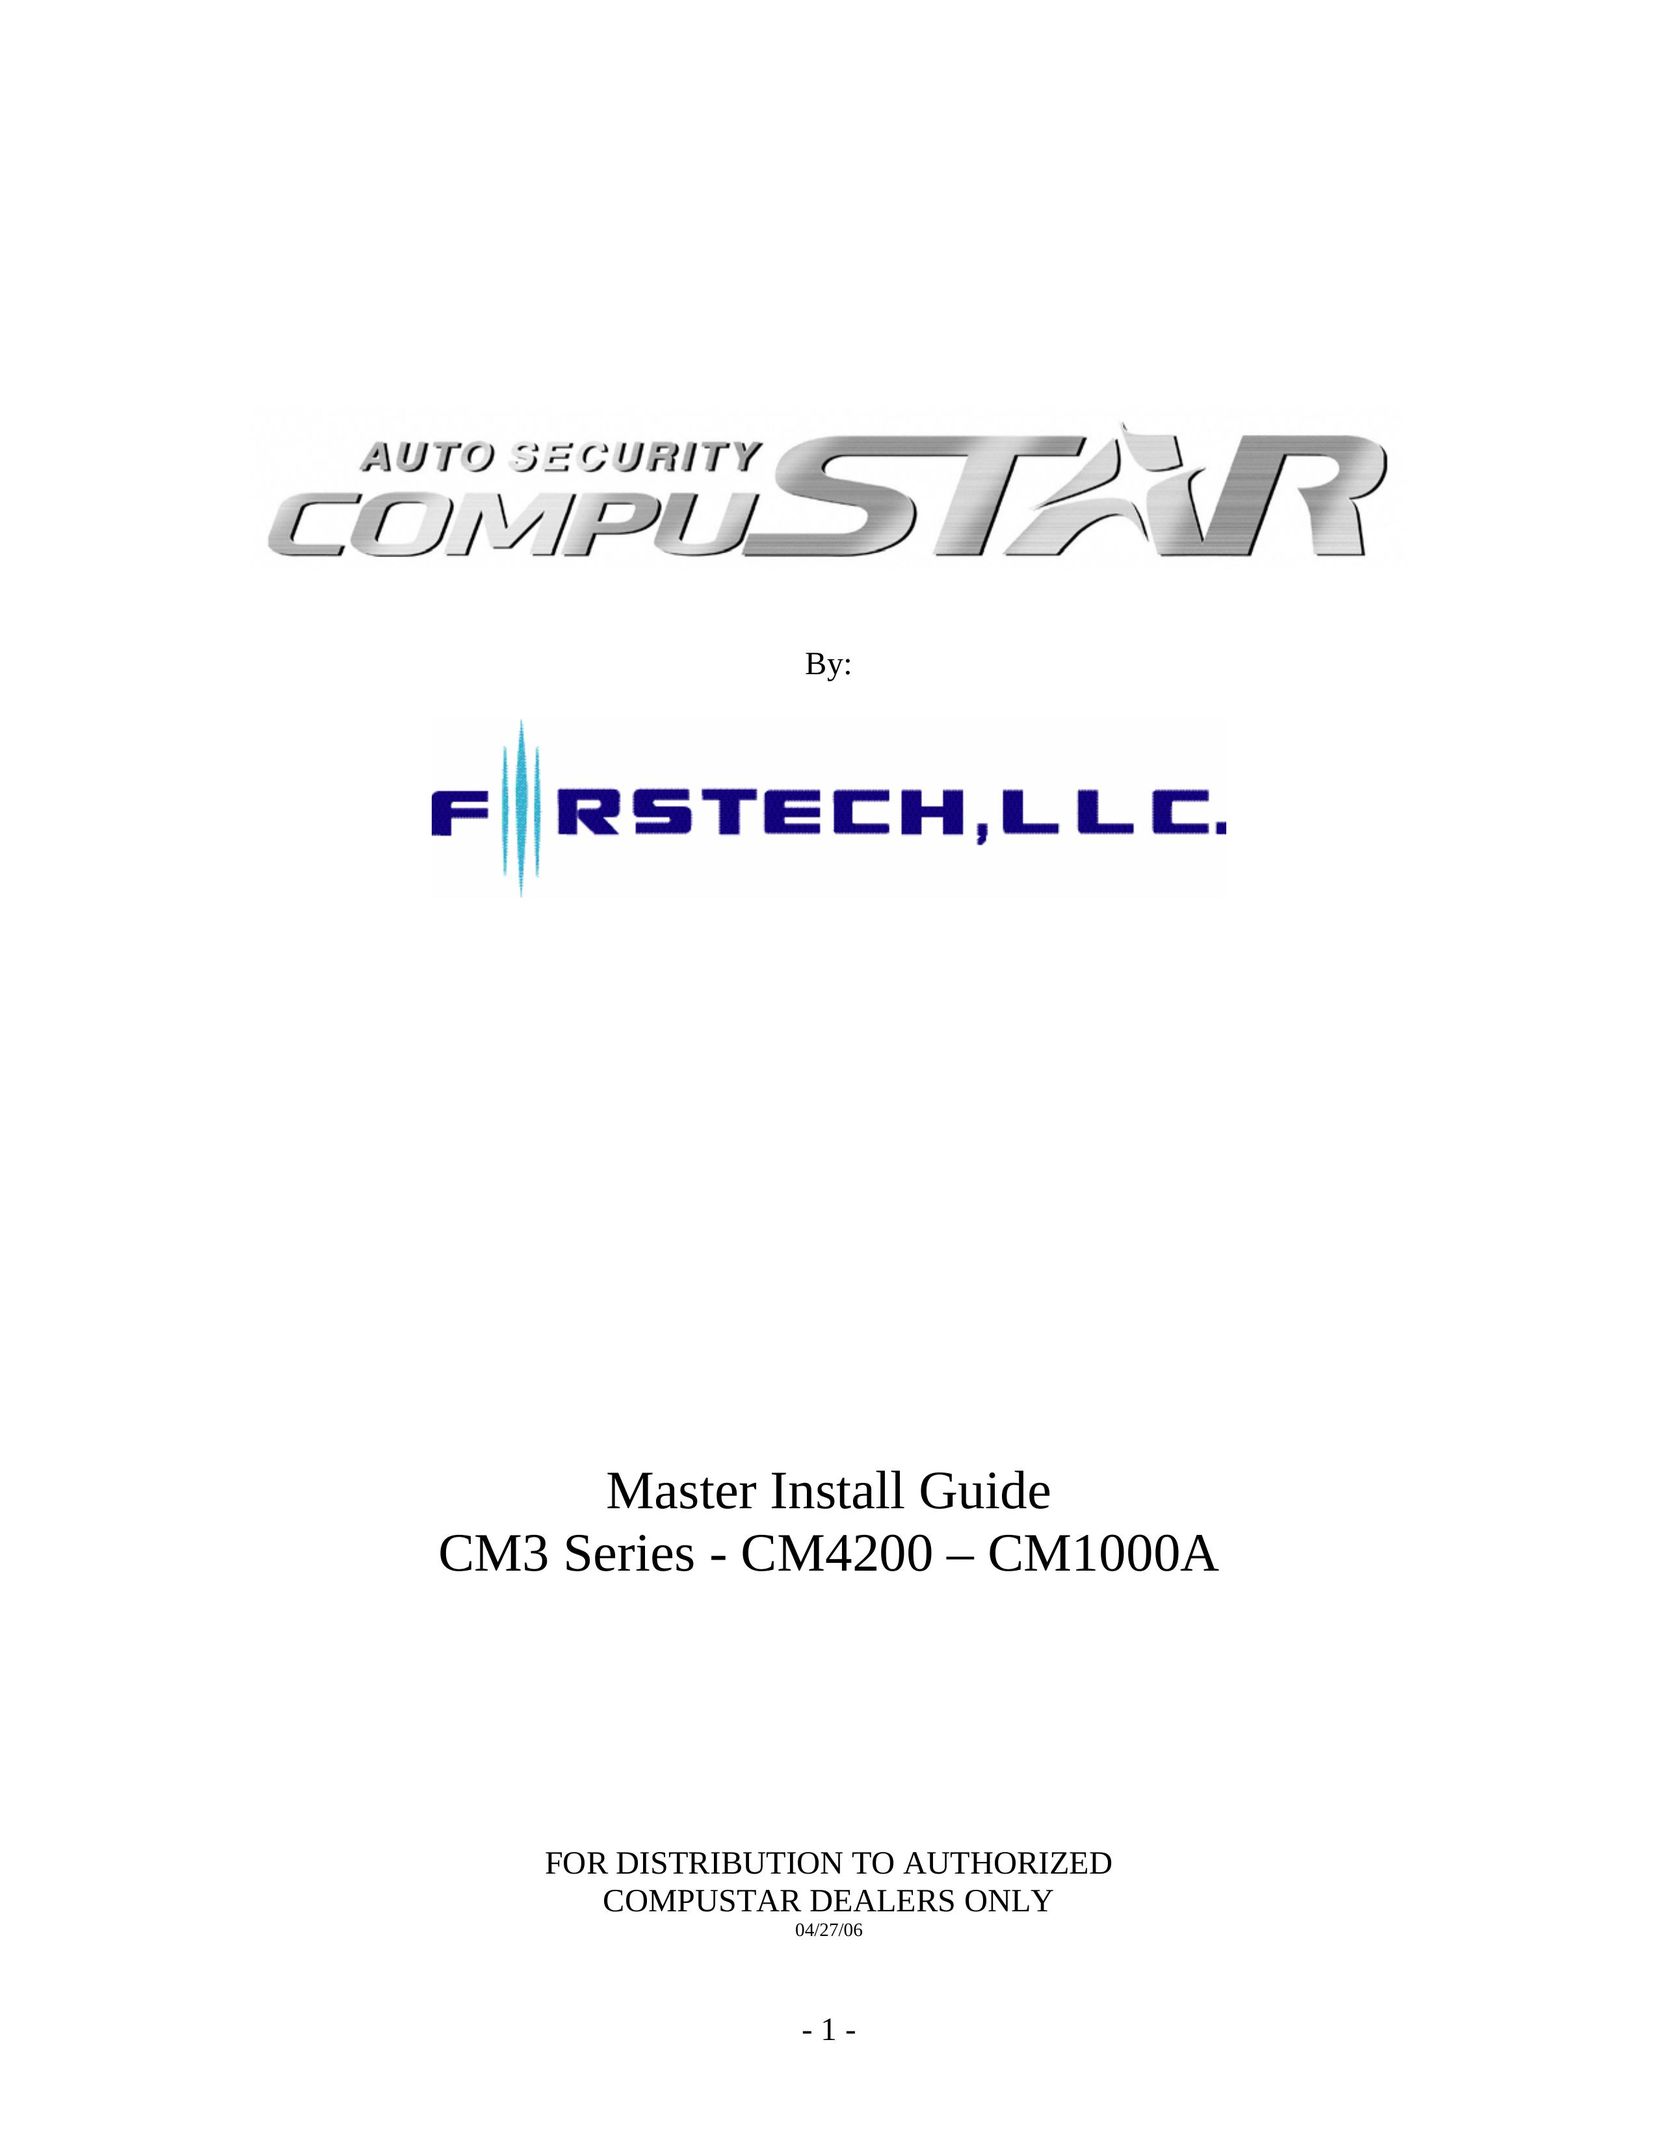 Firstech, LLC. CM4200 Flat Panel Television User Manual